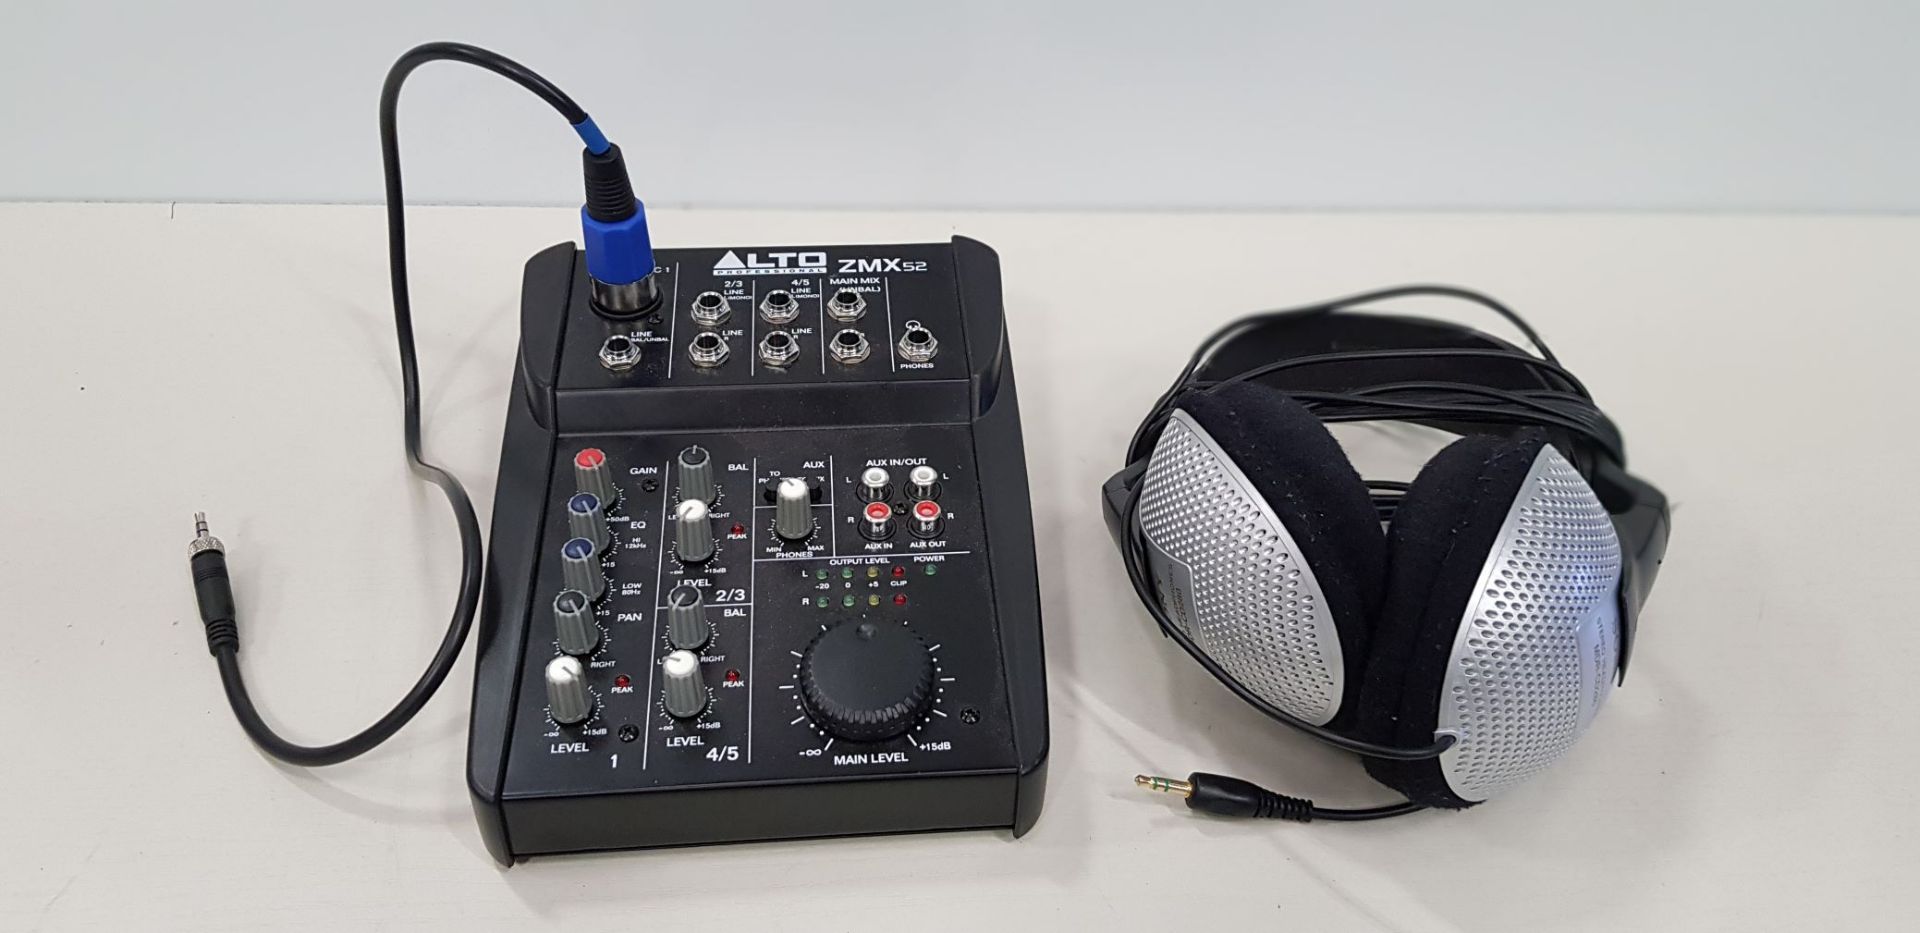 MISC AUDIO LOT CONSISTING SE PROFESSIONAL MICROPHONE, SONY HEADPHONES, ALTO ZMX52 PROFESSIONAL - Image 3 of 3